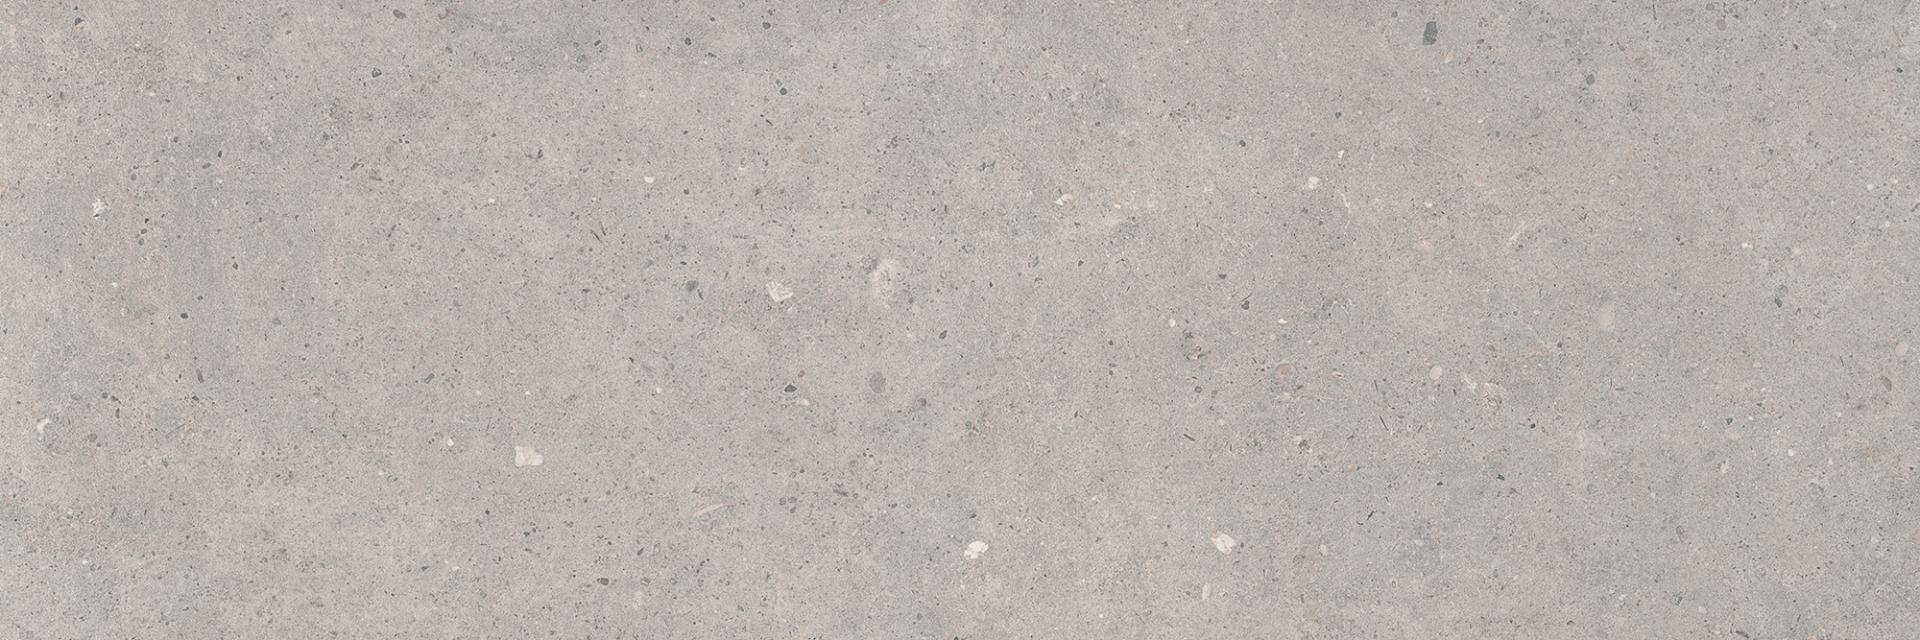 faience-sanchis-cement-stone-40x120-0-96m2-paq-grey-1